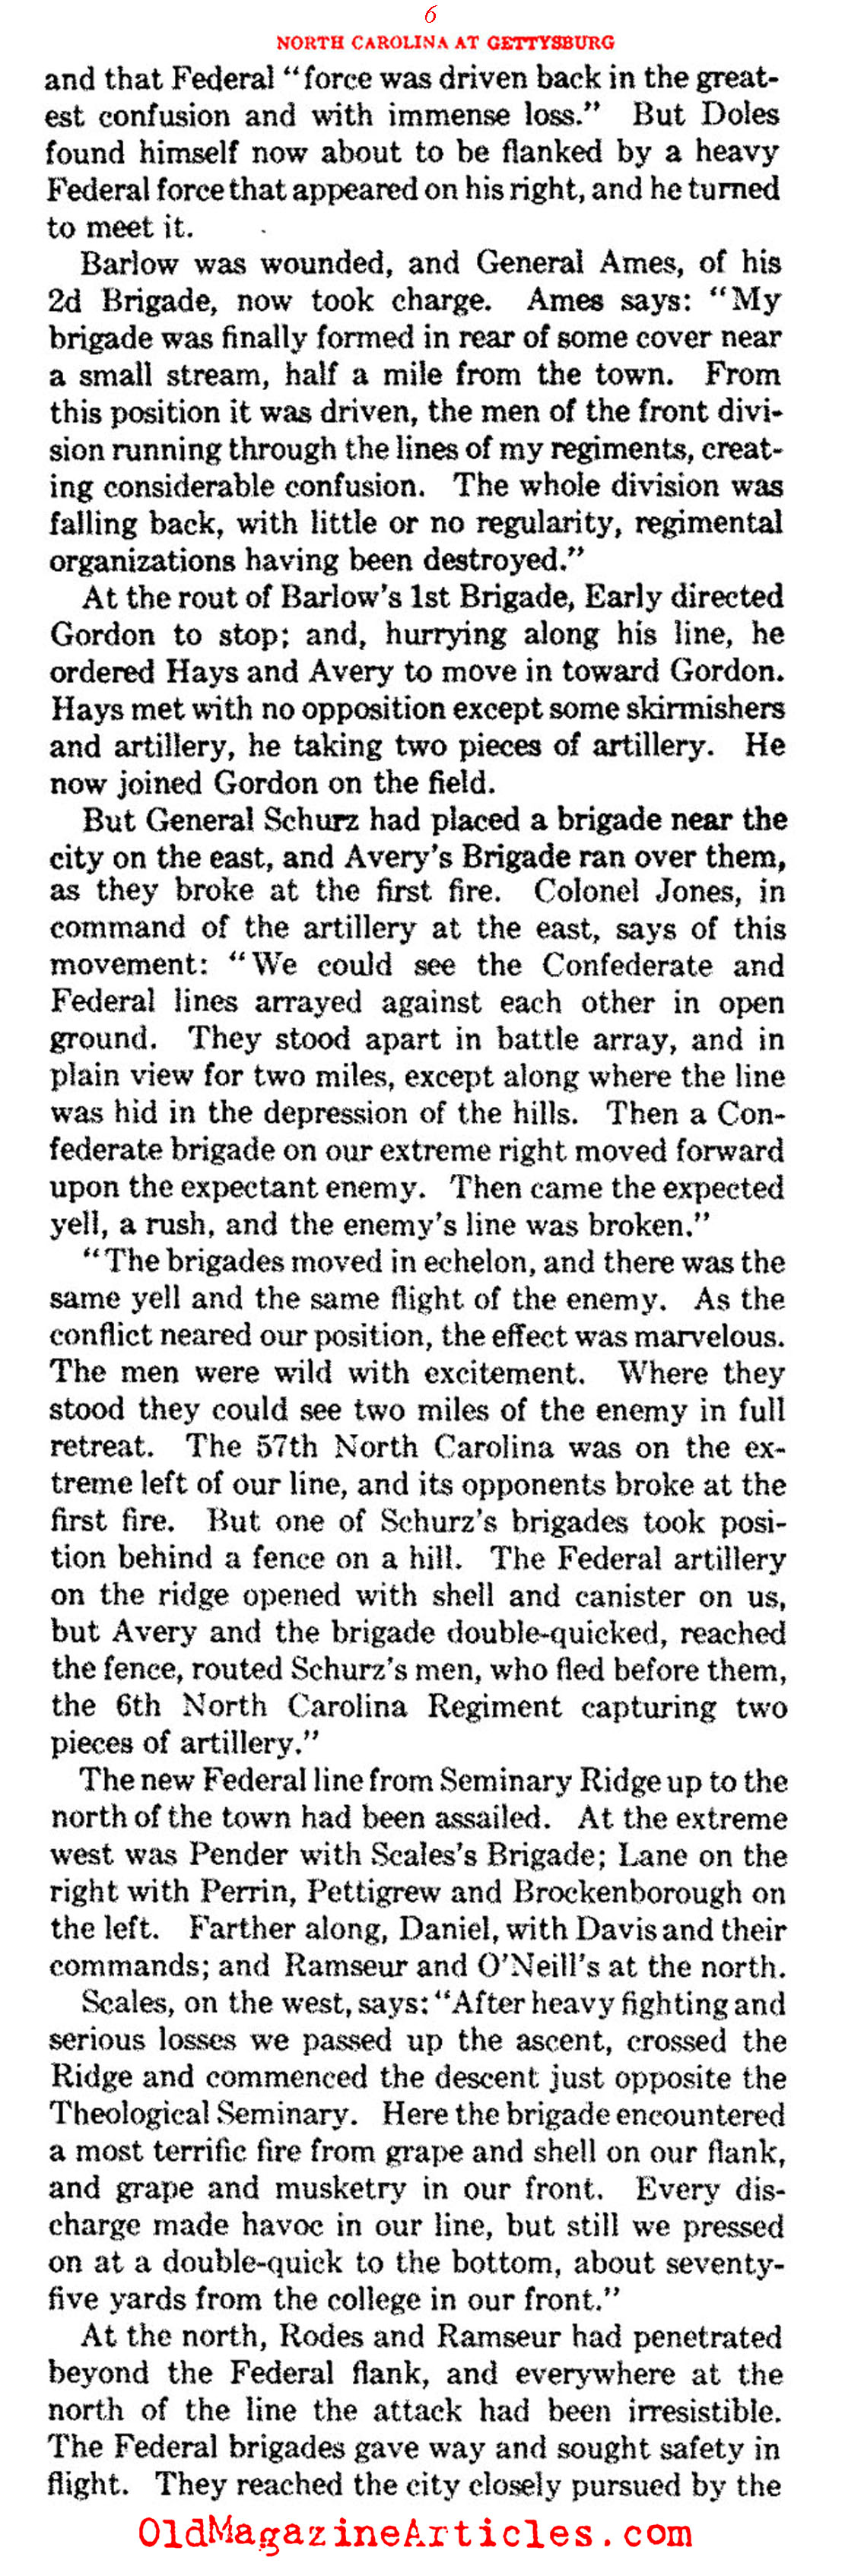 The North Carolina Presence at Gettysburg  (Confederate Veteran Magazine, 1930)